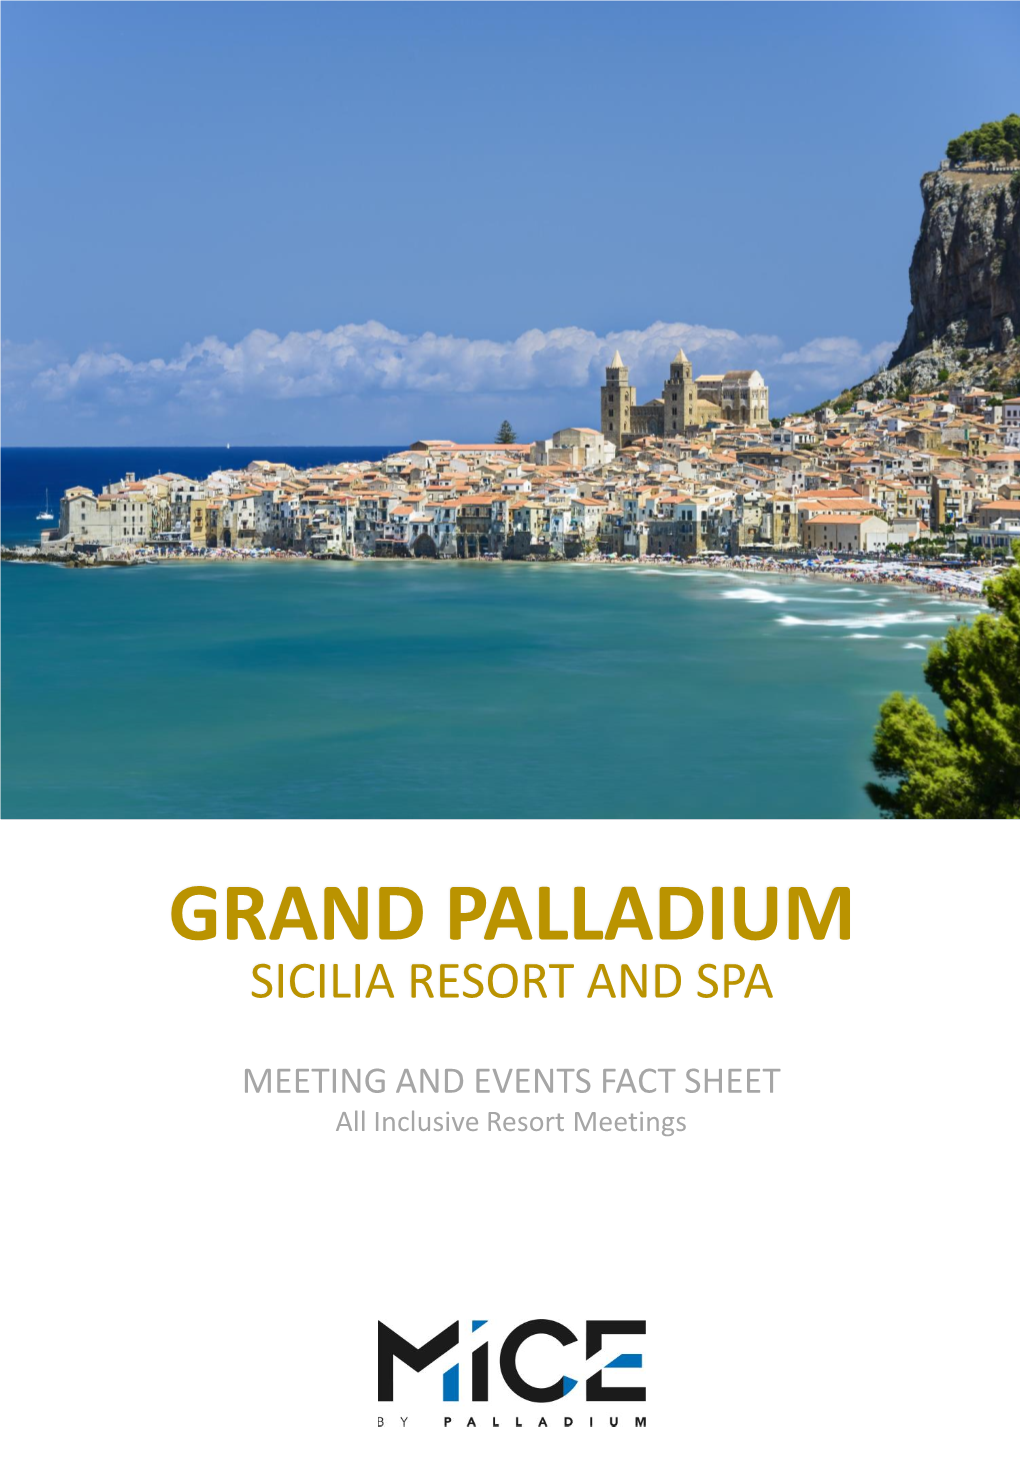 Grand Palladium Sicilia Resort and Spa